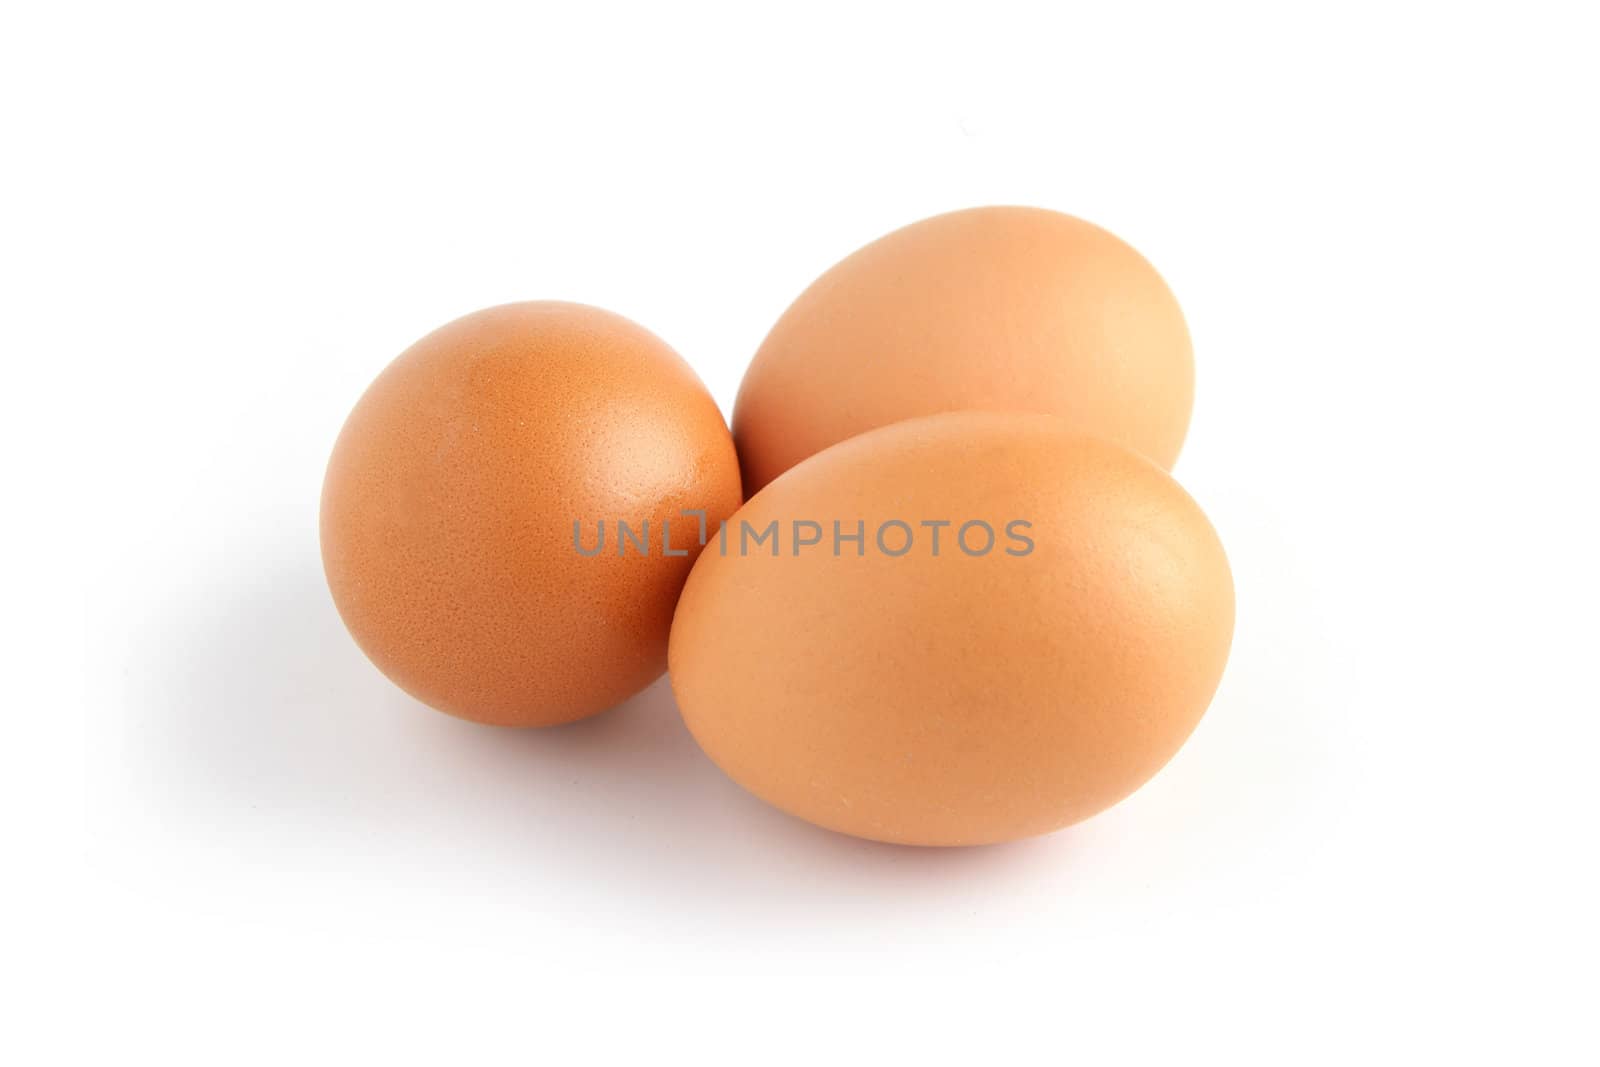 Three chicken eggs by phovoir